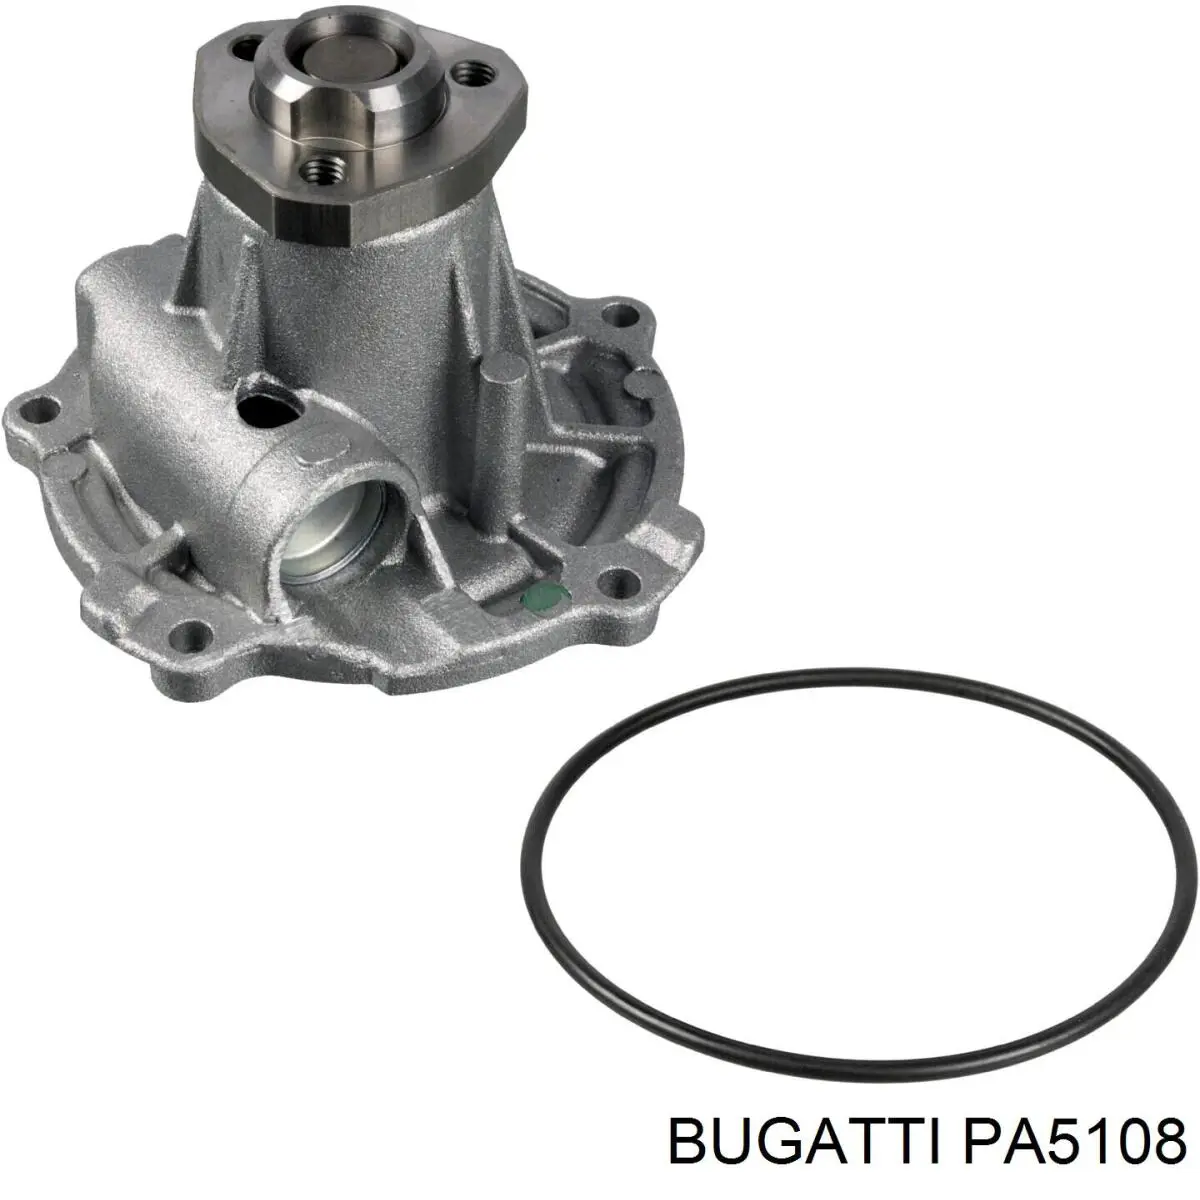 Помпа водяная (насос) охлаждения Bugatti PA5108